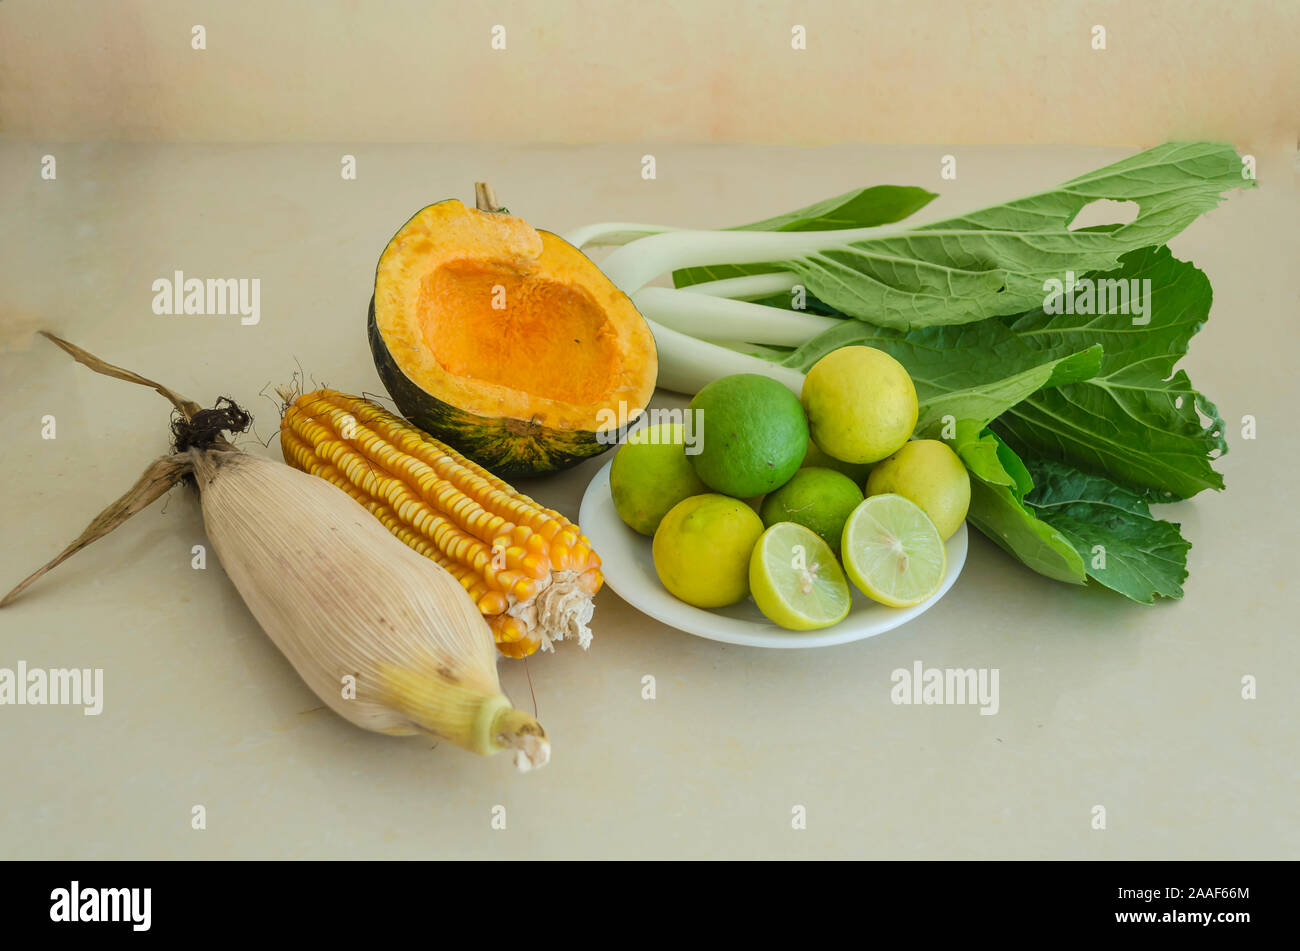 Citrus, Vegetables, And Grains Stock Photo